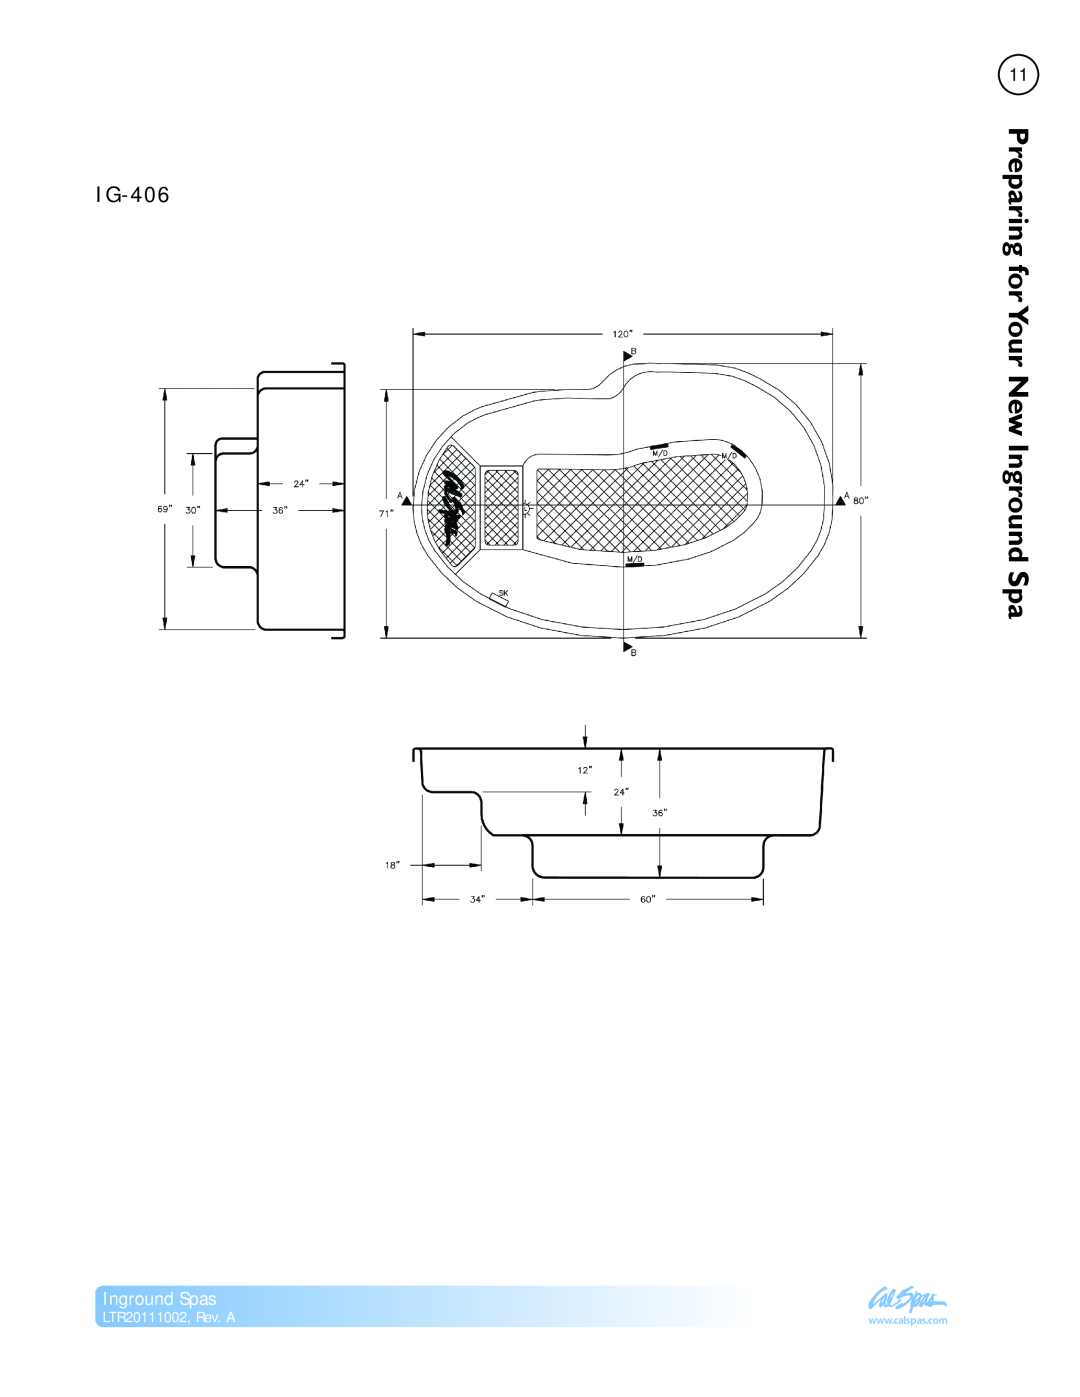 Cal Spas manual IG-406, Your New Inground Spa, Inground Spas, LTR20111002, Rev. A, Preparingfor 